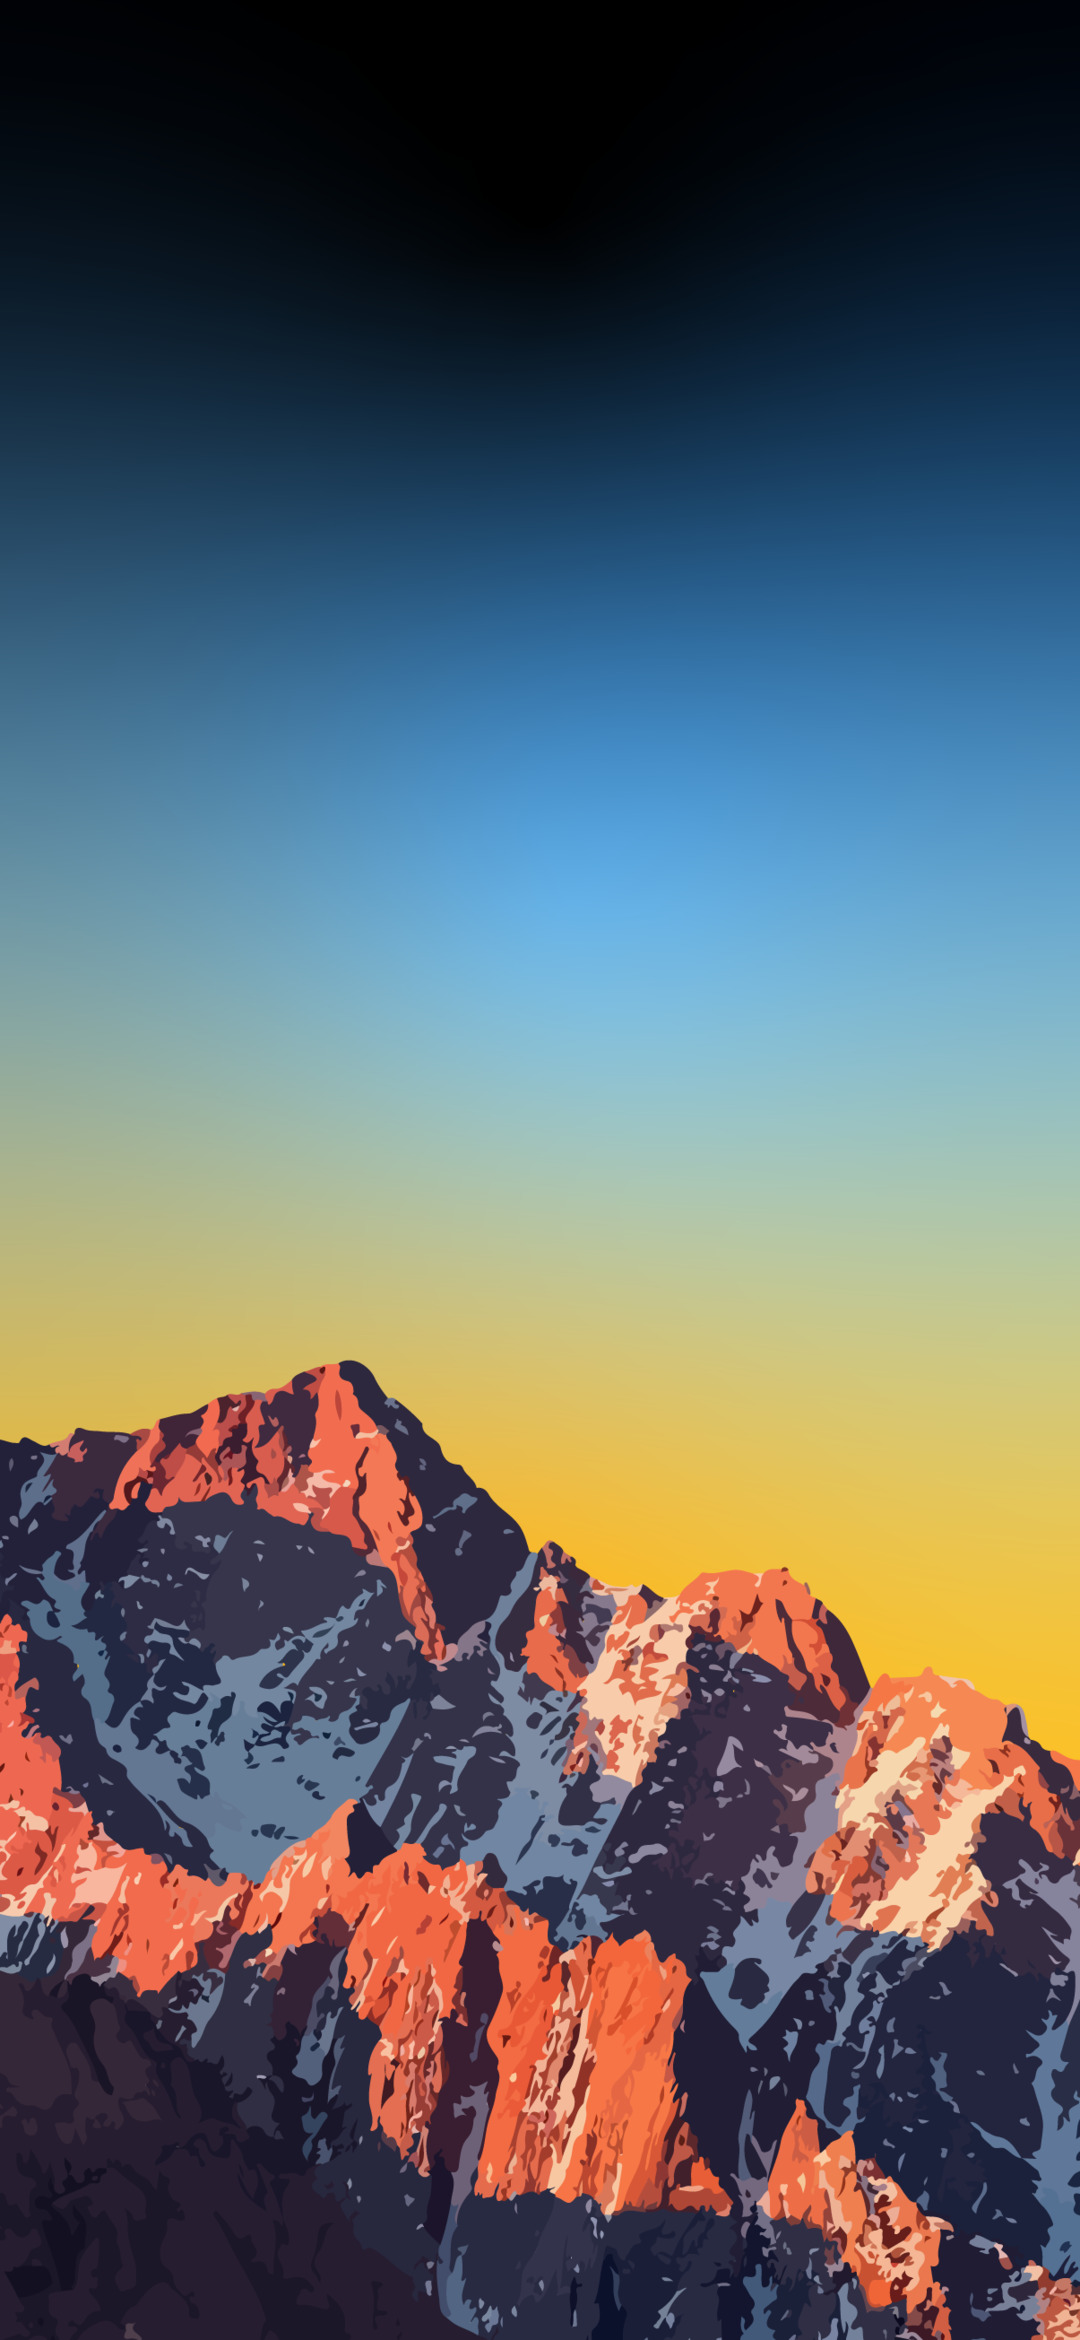 Wallpaper Mac os Sierra, Macbook, Operating System, Safari, Mountain,  Background - Download Free Image